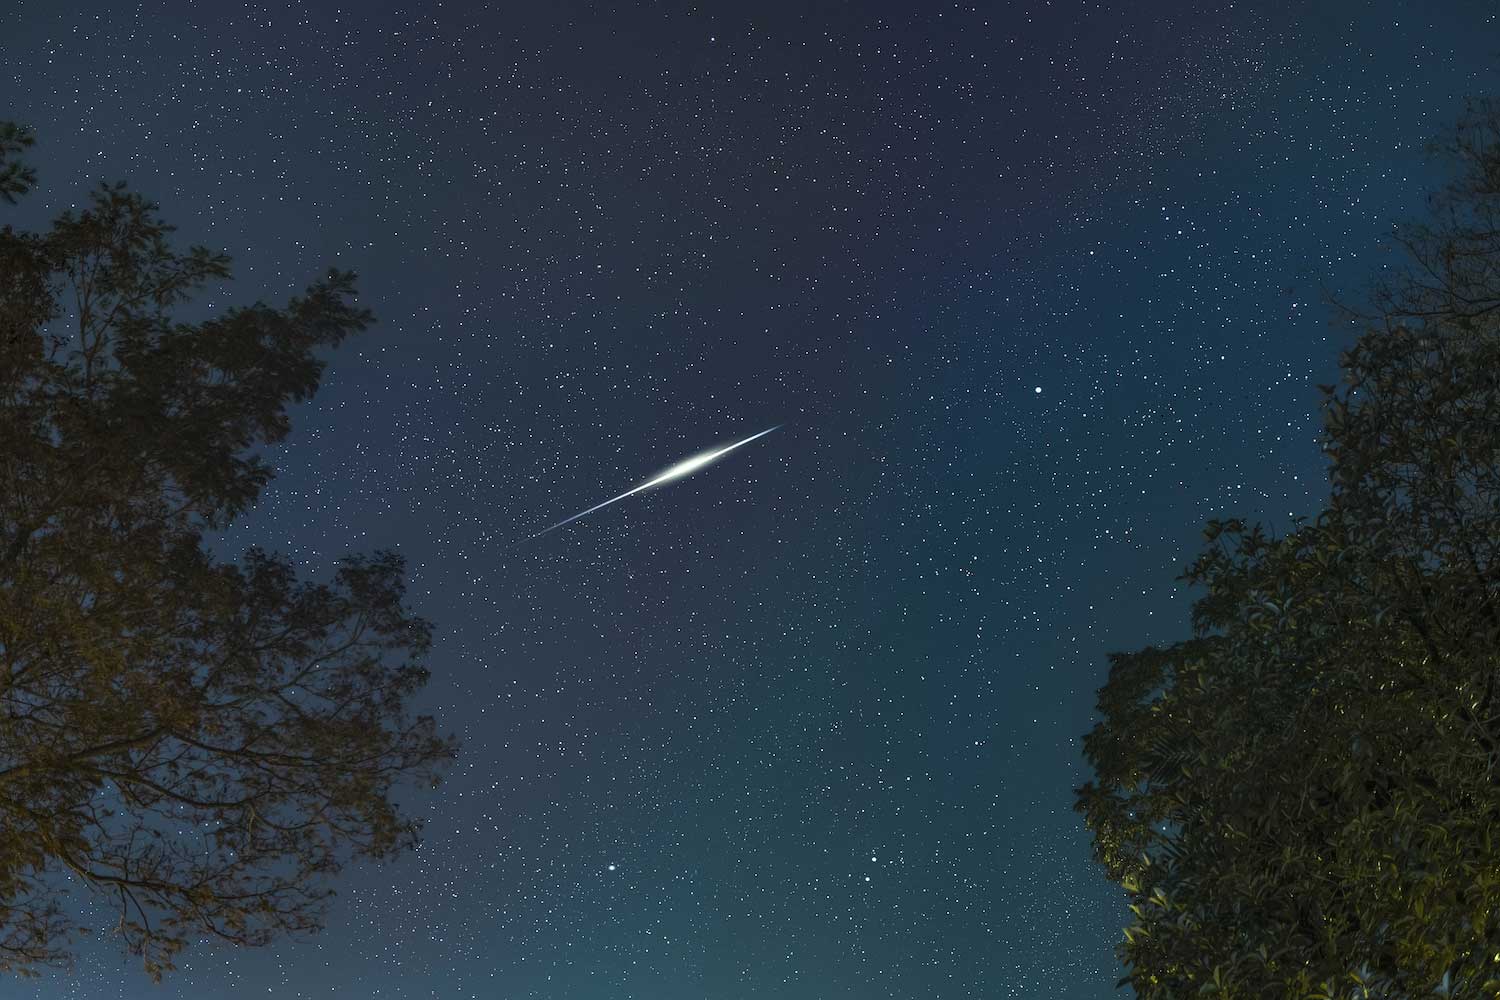 A shooting star streaking across the night sky.